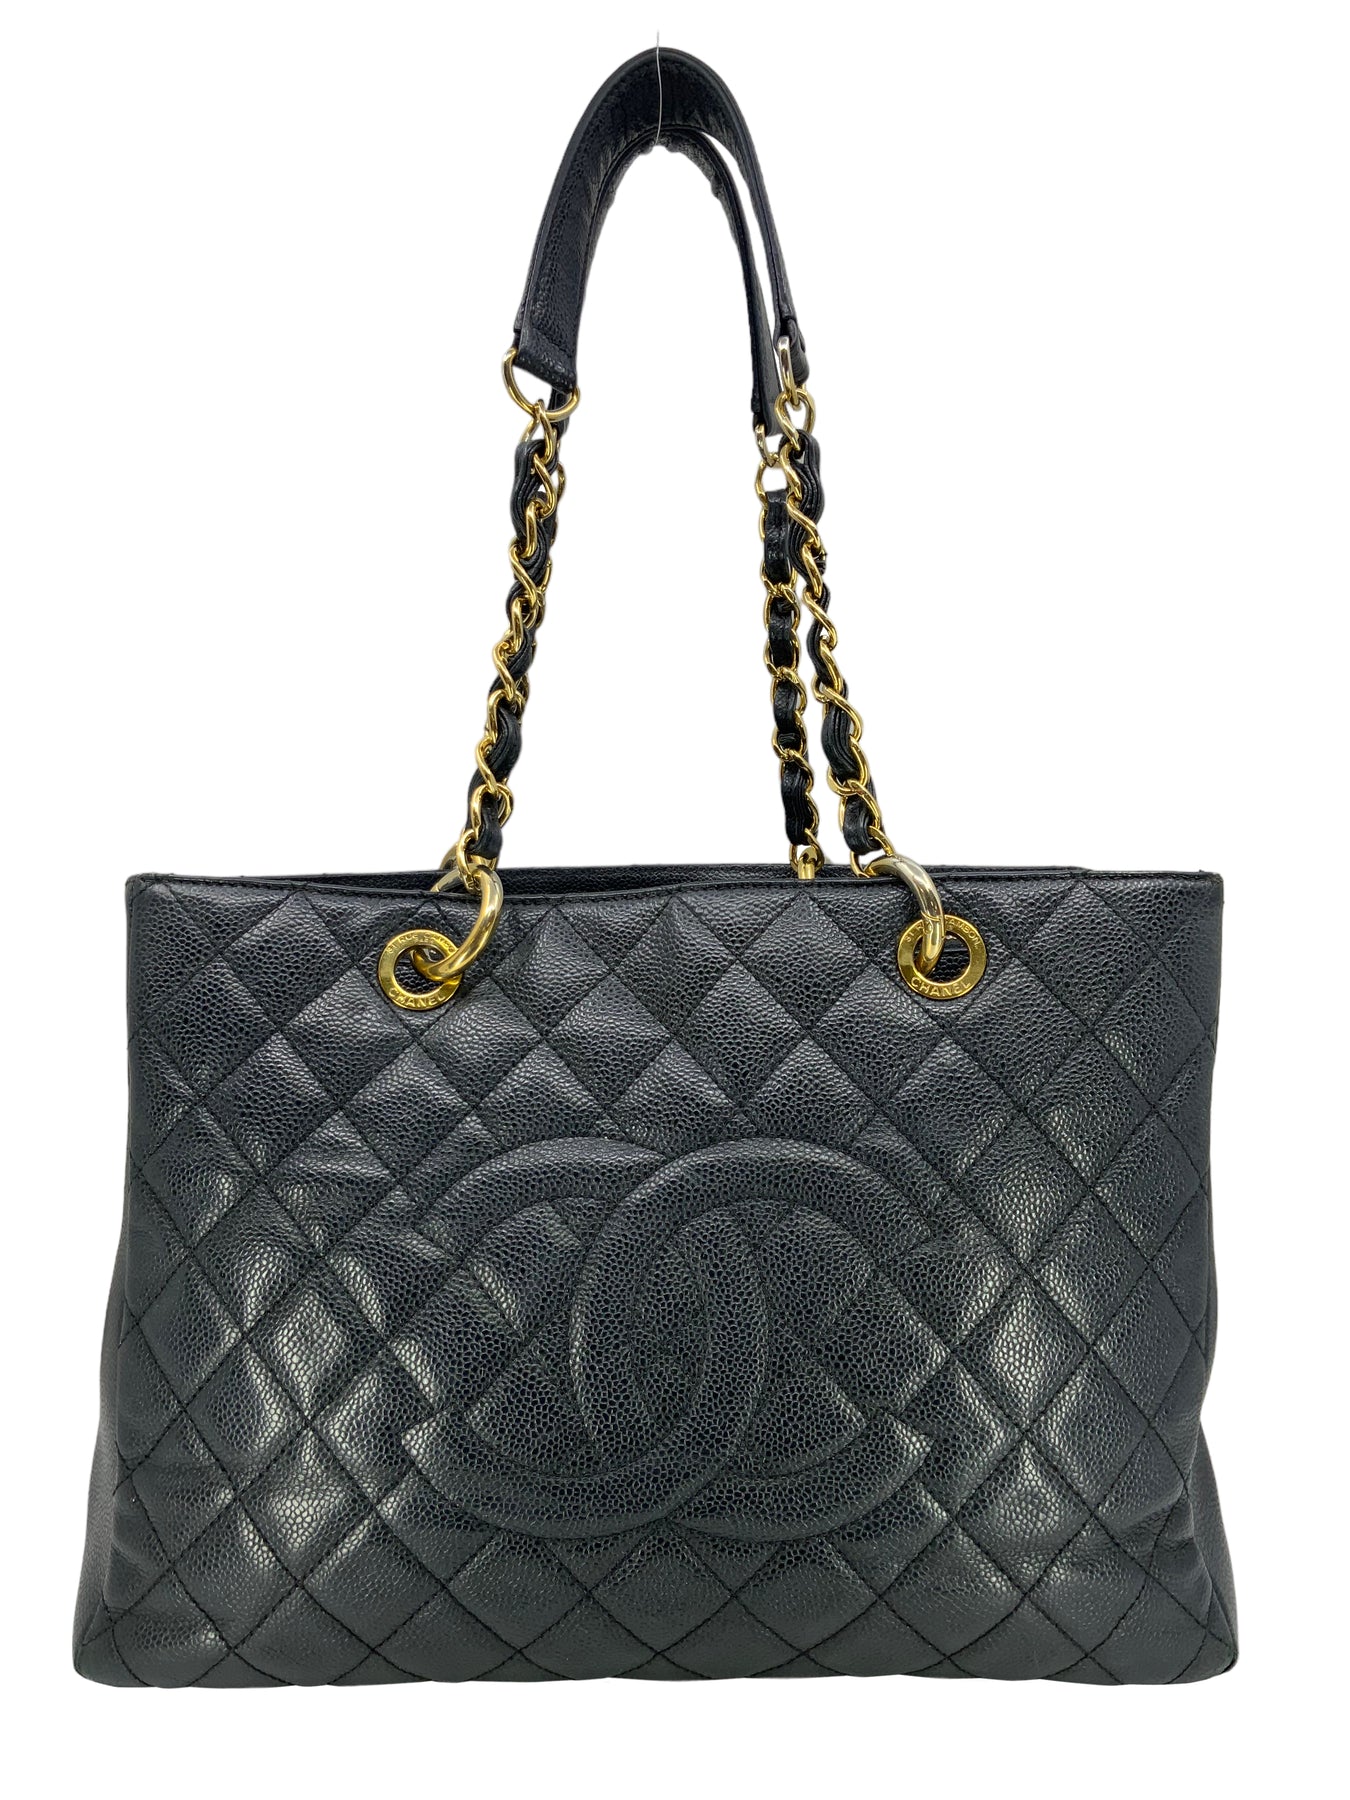 $2500 Chanel Classic Dark Beige Tan Caviar Leather Petite Shopping